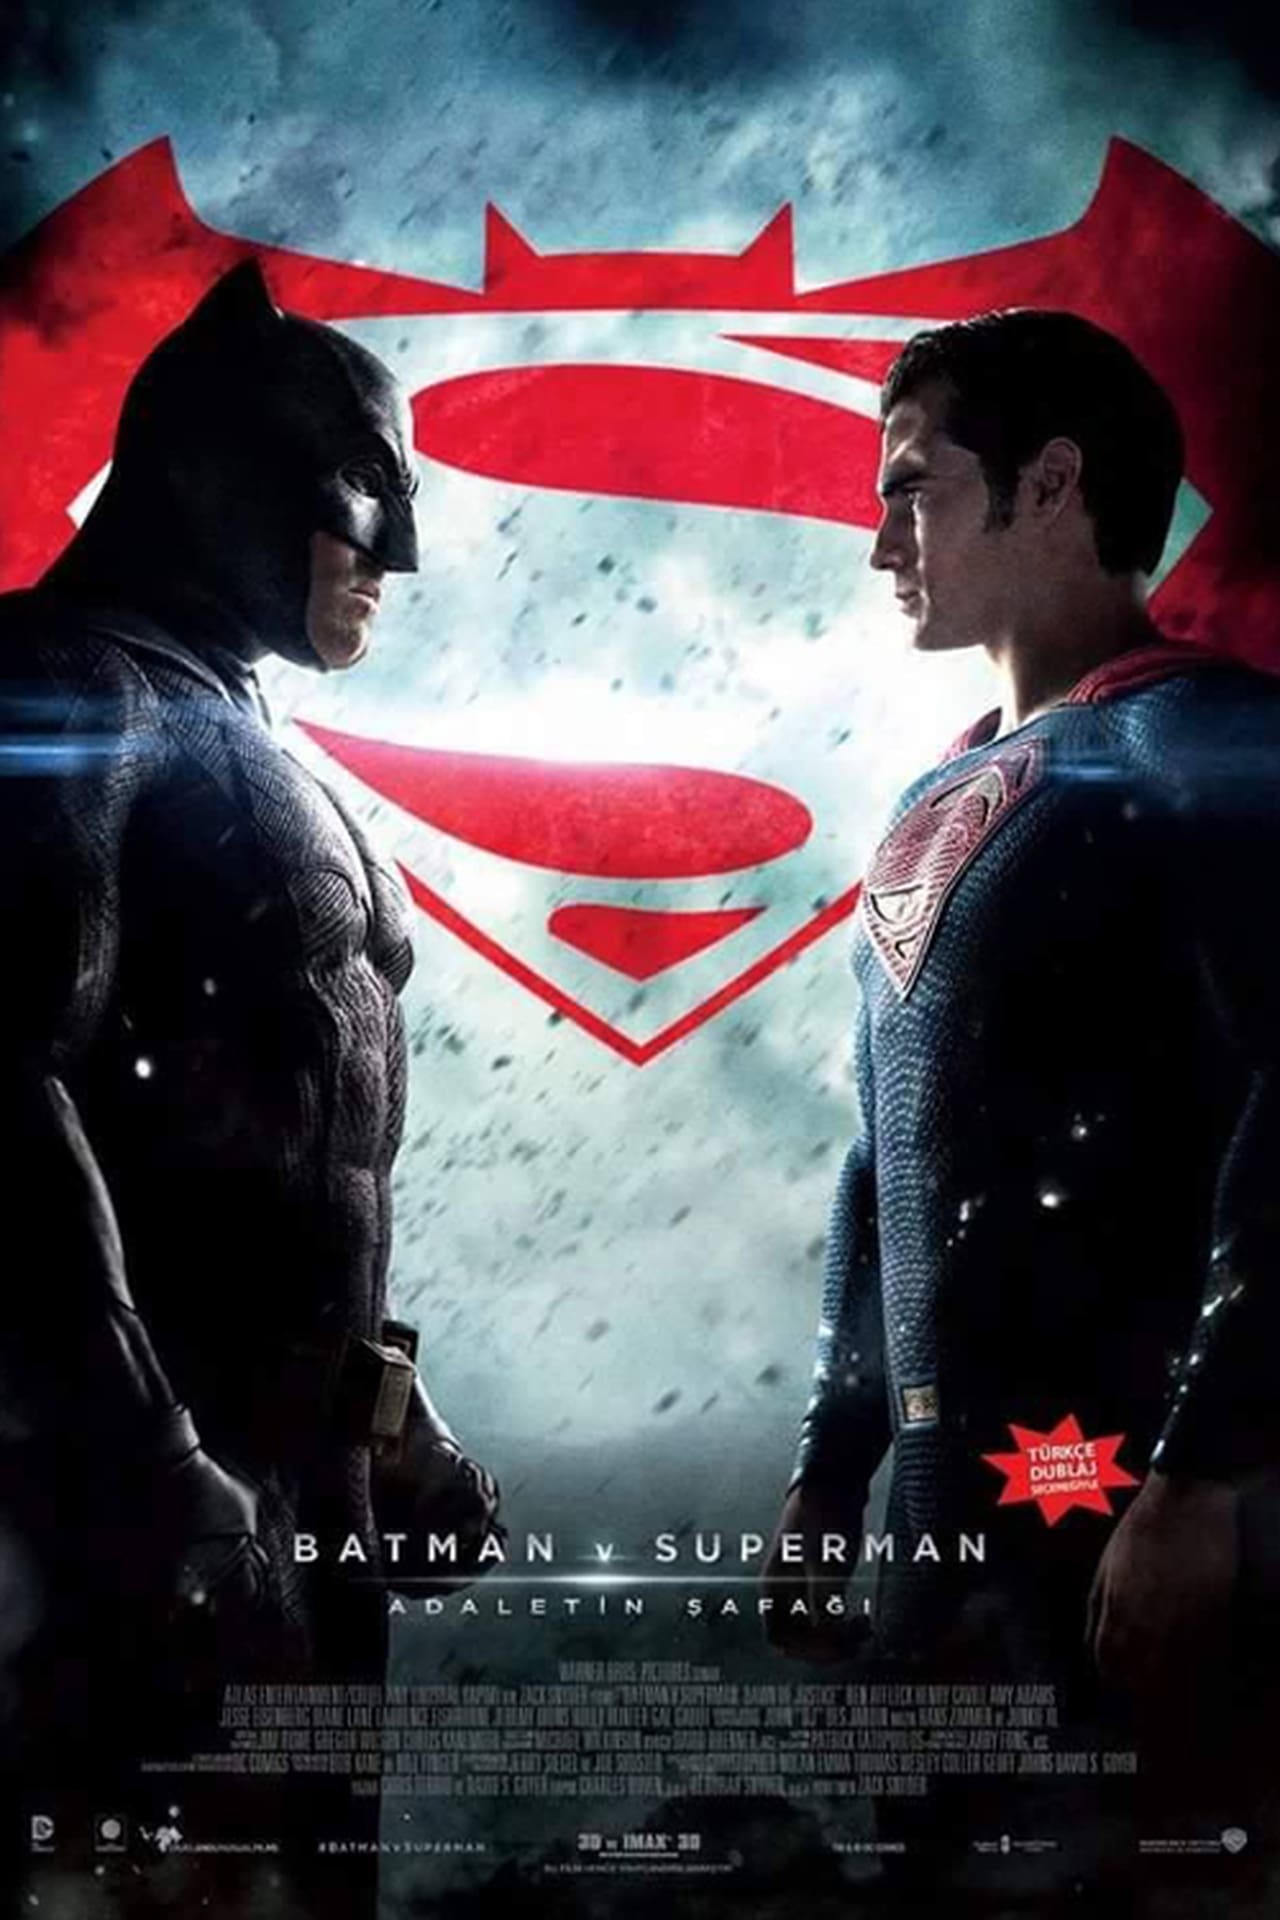 Batman v Superman: Dawn of Justice (2016) Theatrical Cut 448Kbps 23.976Fps 48Khz 5.1Ch BluRay Turkish Audio TAC